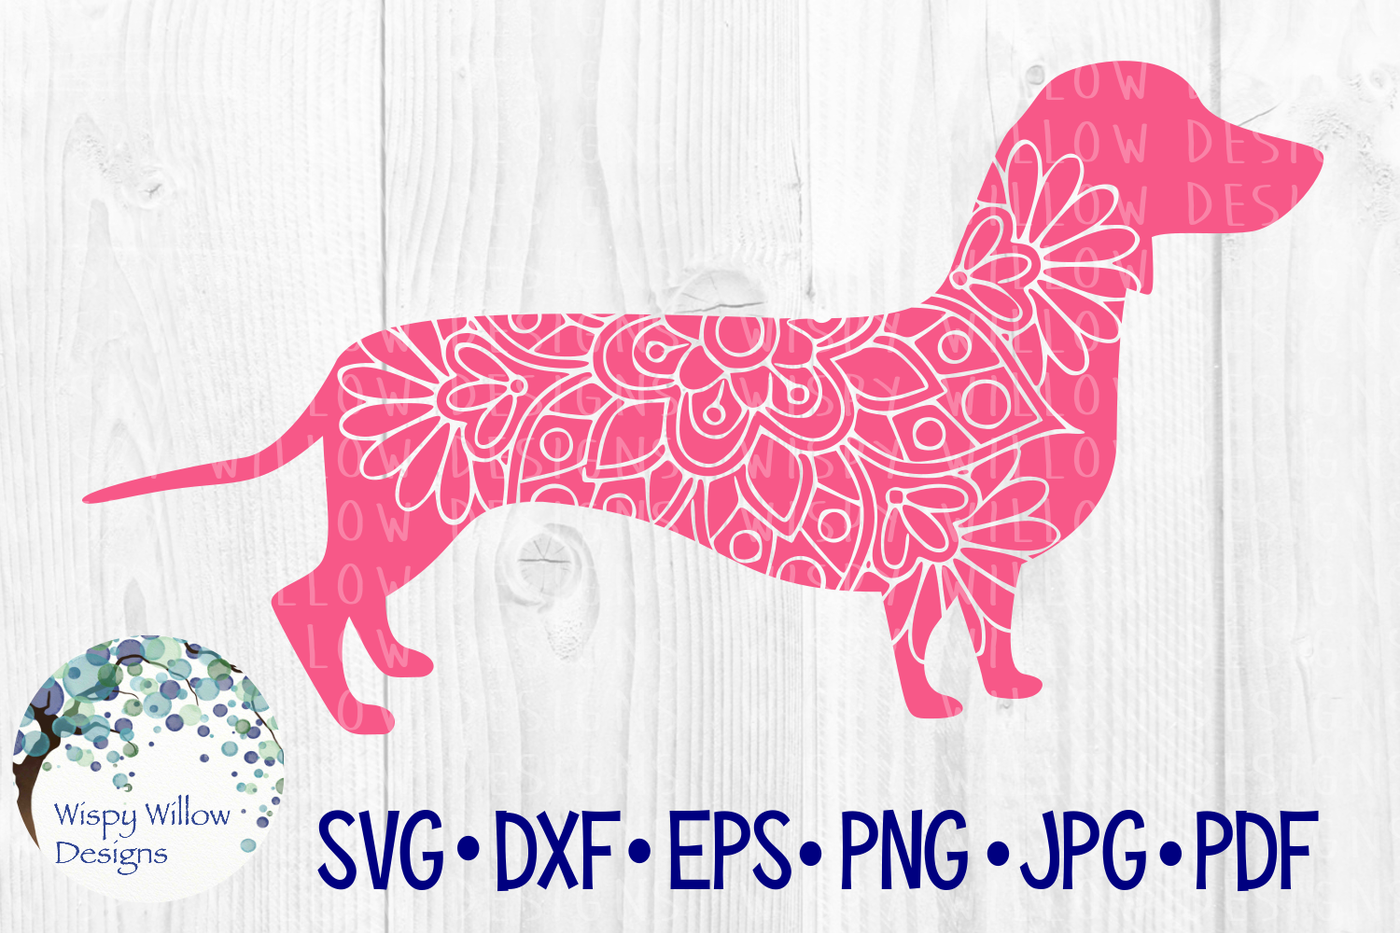 Dachshund Dog Mandala Weiner Dog Svg Dxf Eps Png Jpg Pdf By Wispy Willow Designs Thehungryjpeg Com